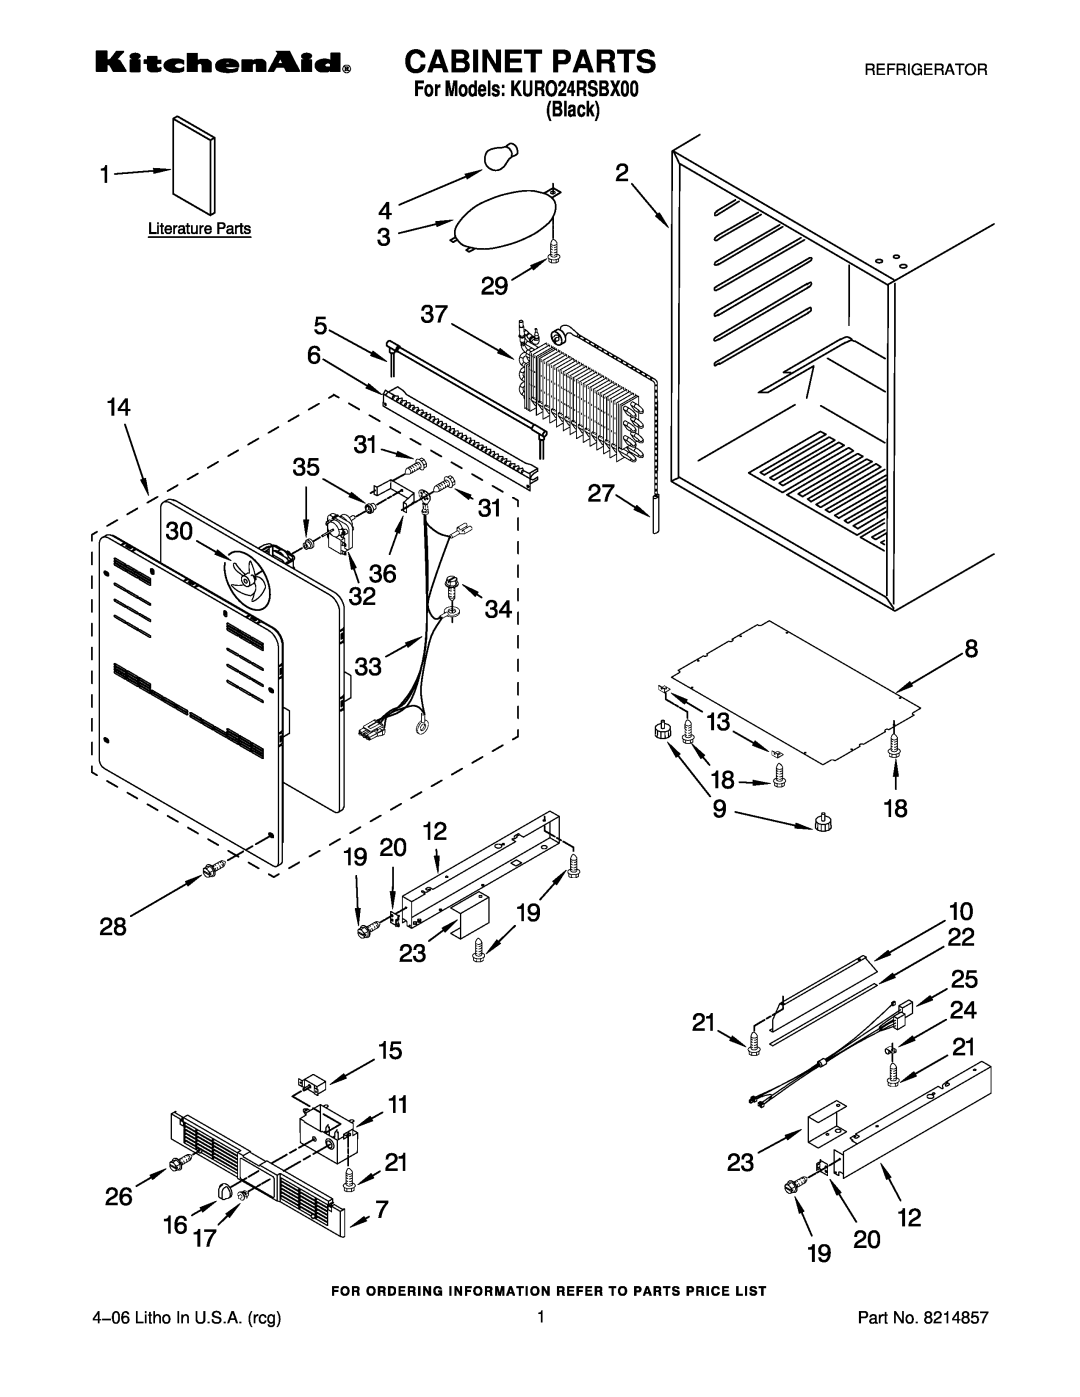 KitchenAid manual Cabinet Parts, 4−06 Litho In U.S.A. rcg, For Models KURO24RSBX00 Black, Refrigerator 